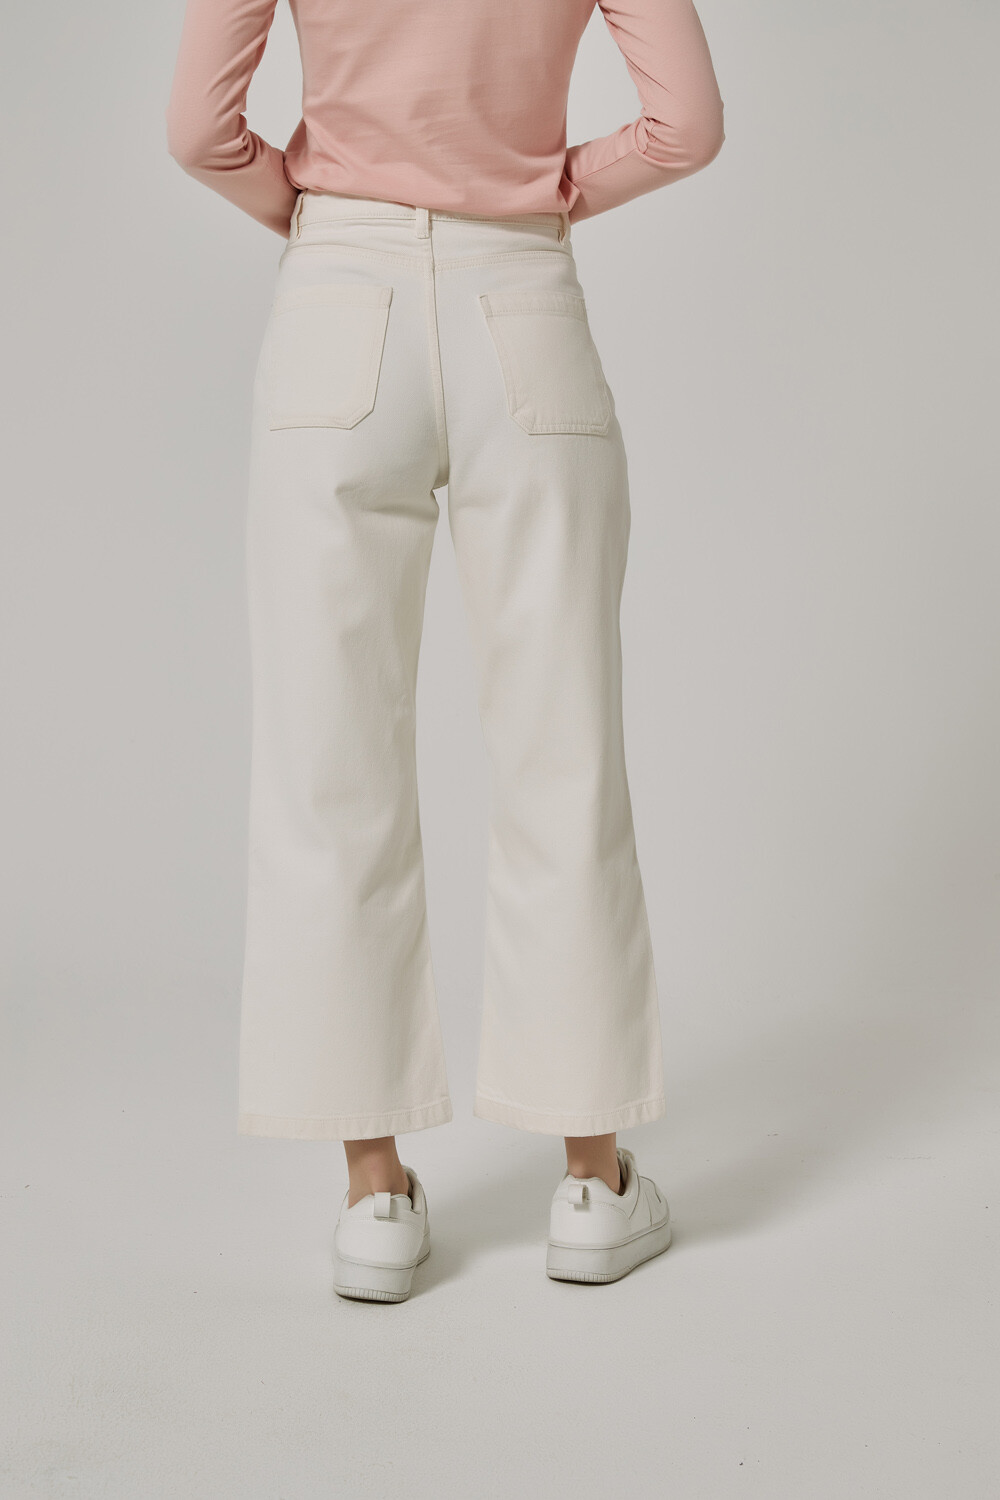 Pantalon Besanzon Marfil / Off White